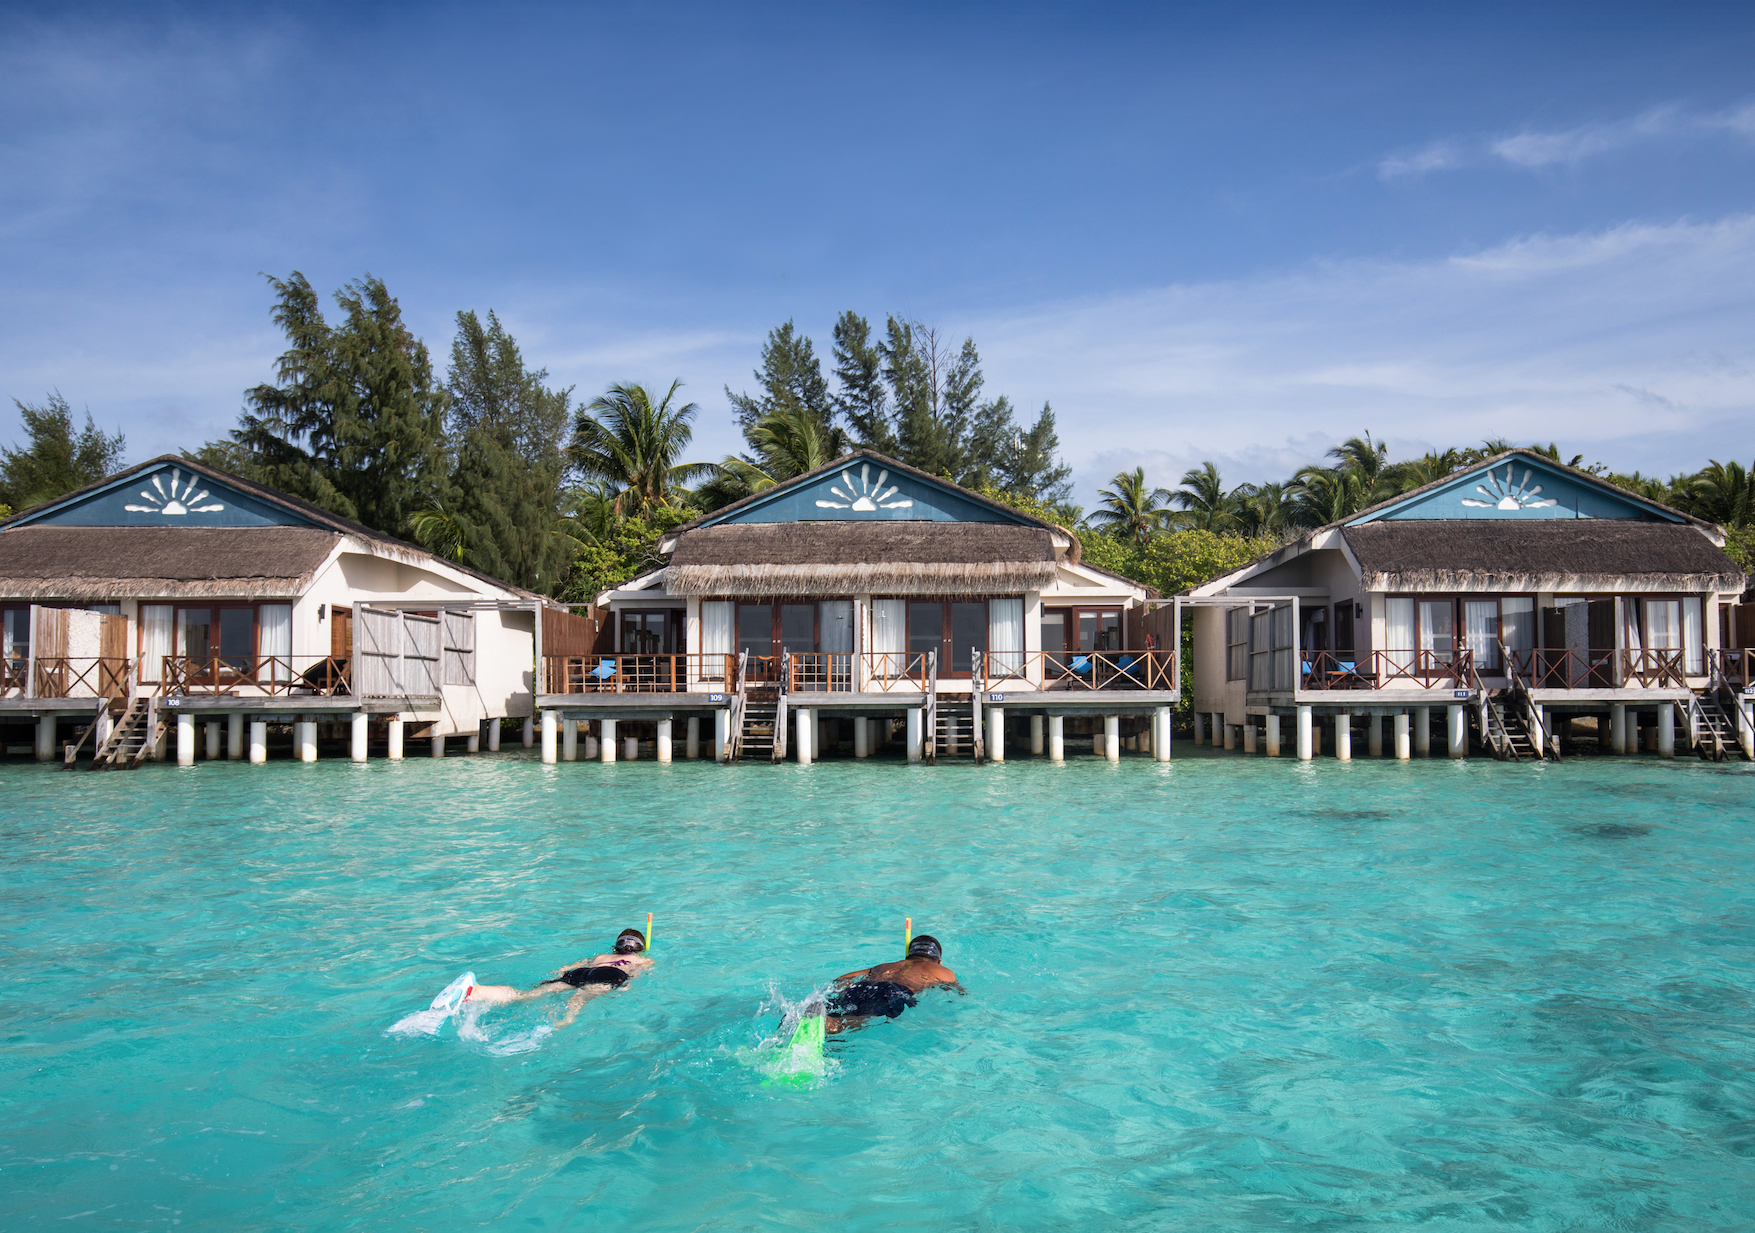   Snorkeling in front of the resort (photo credit: Taj Hotels)  